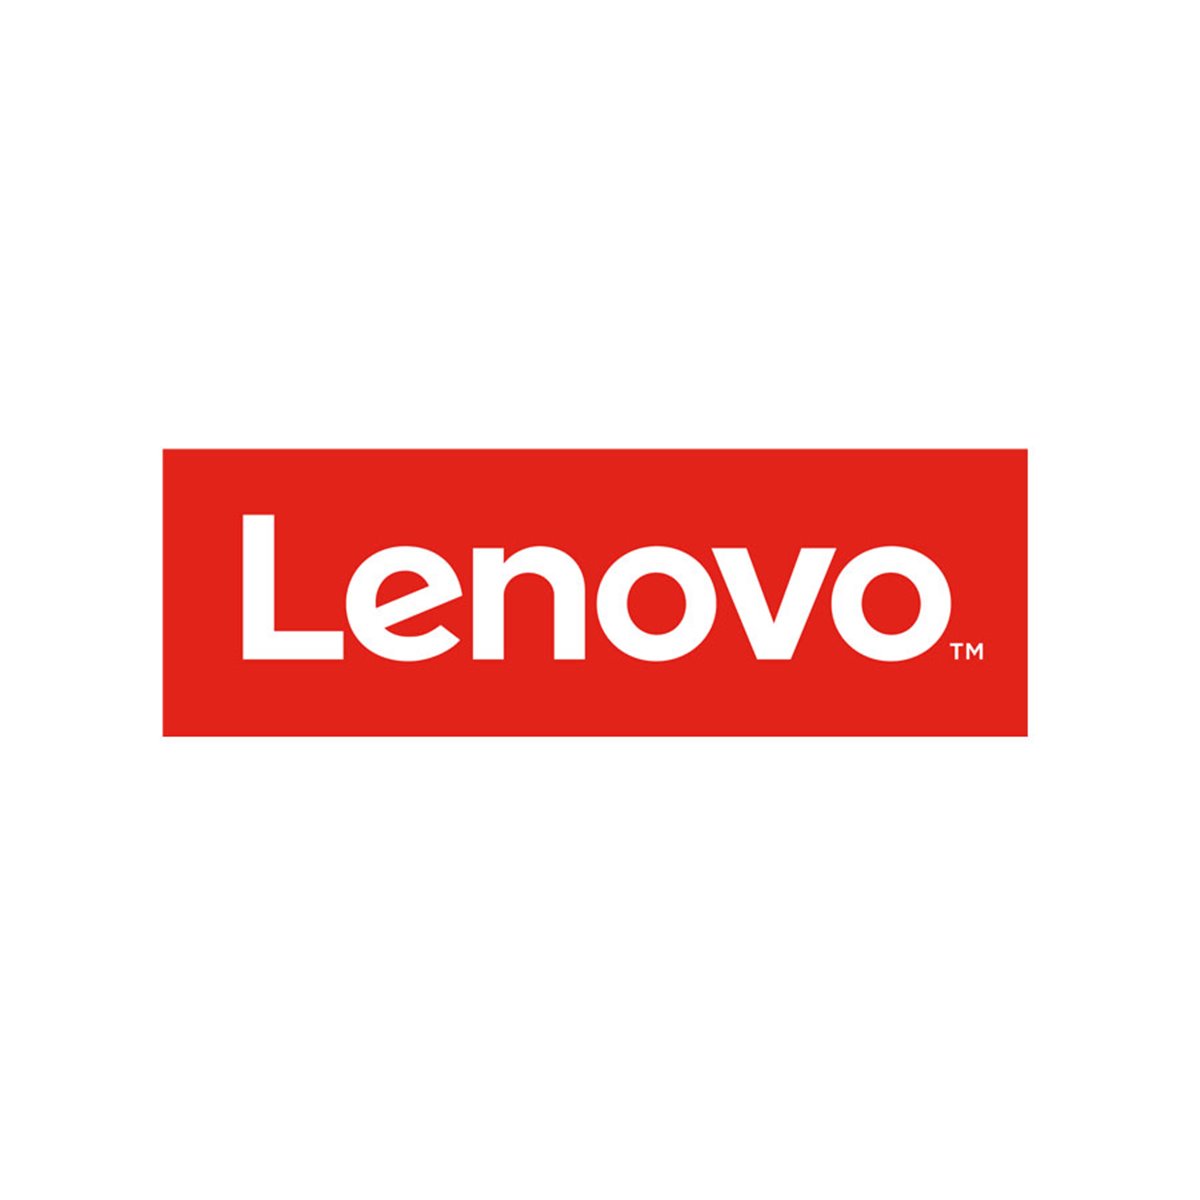 Lenovo Storwize Family for V5000 External Virtualizati on - Remote